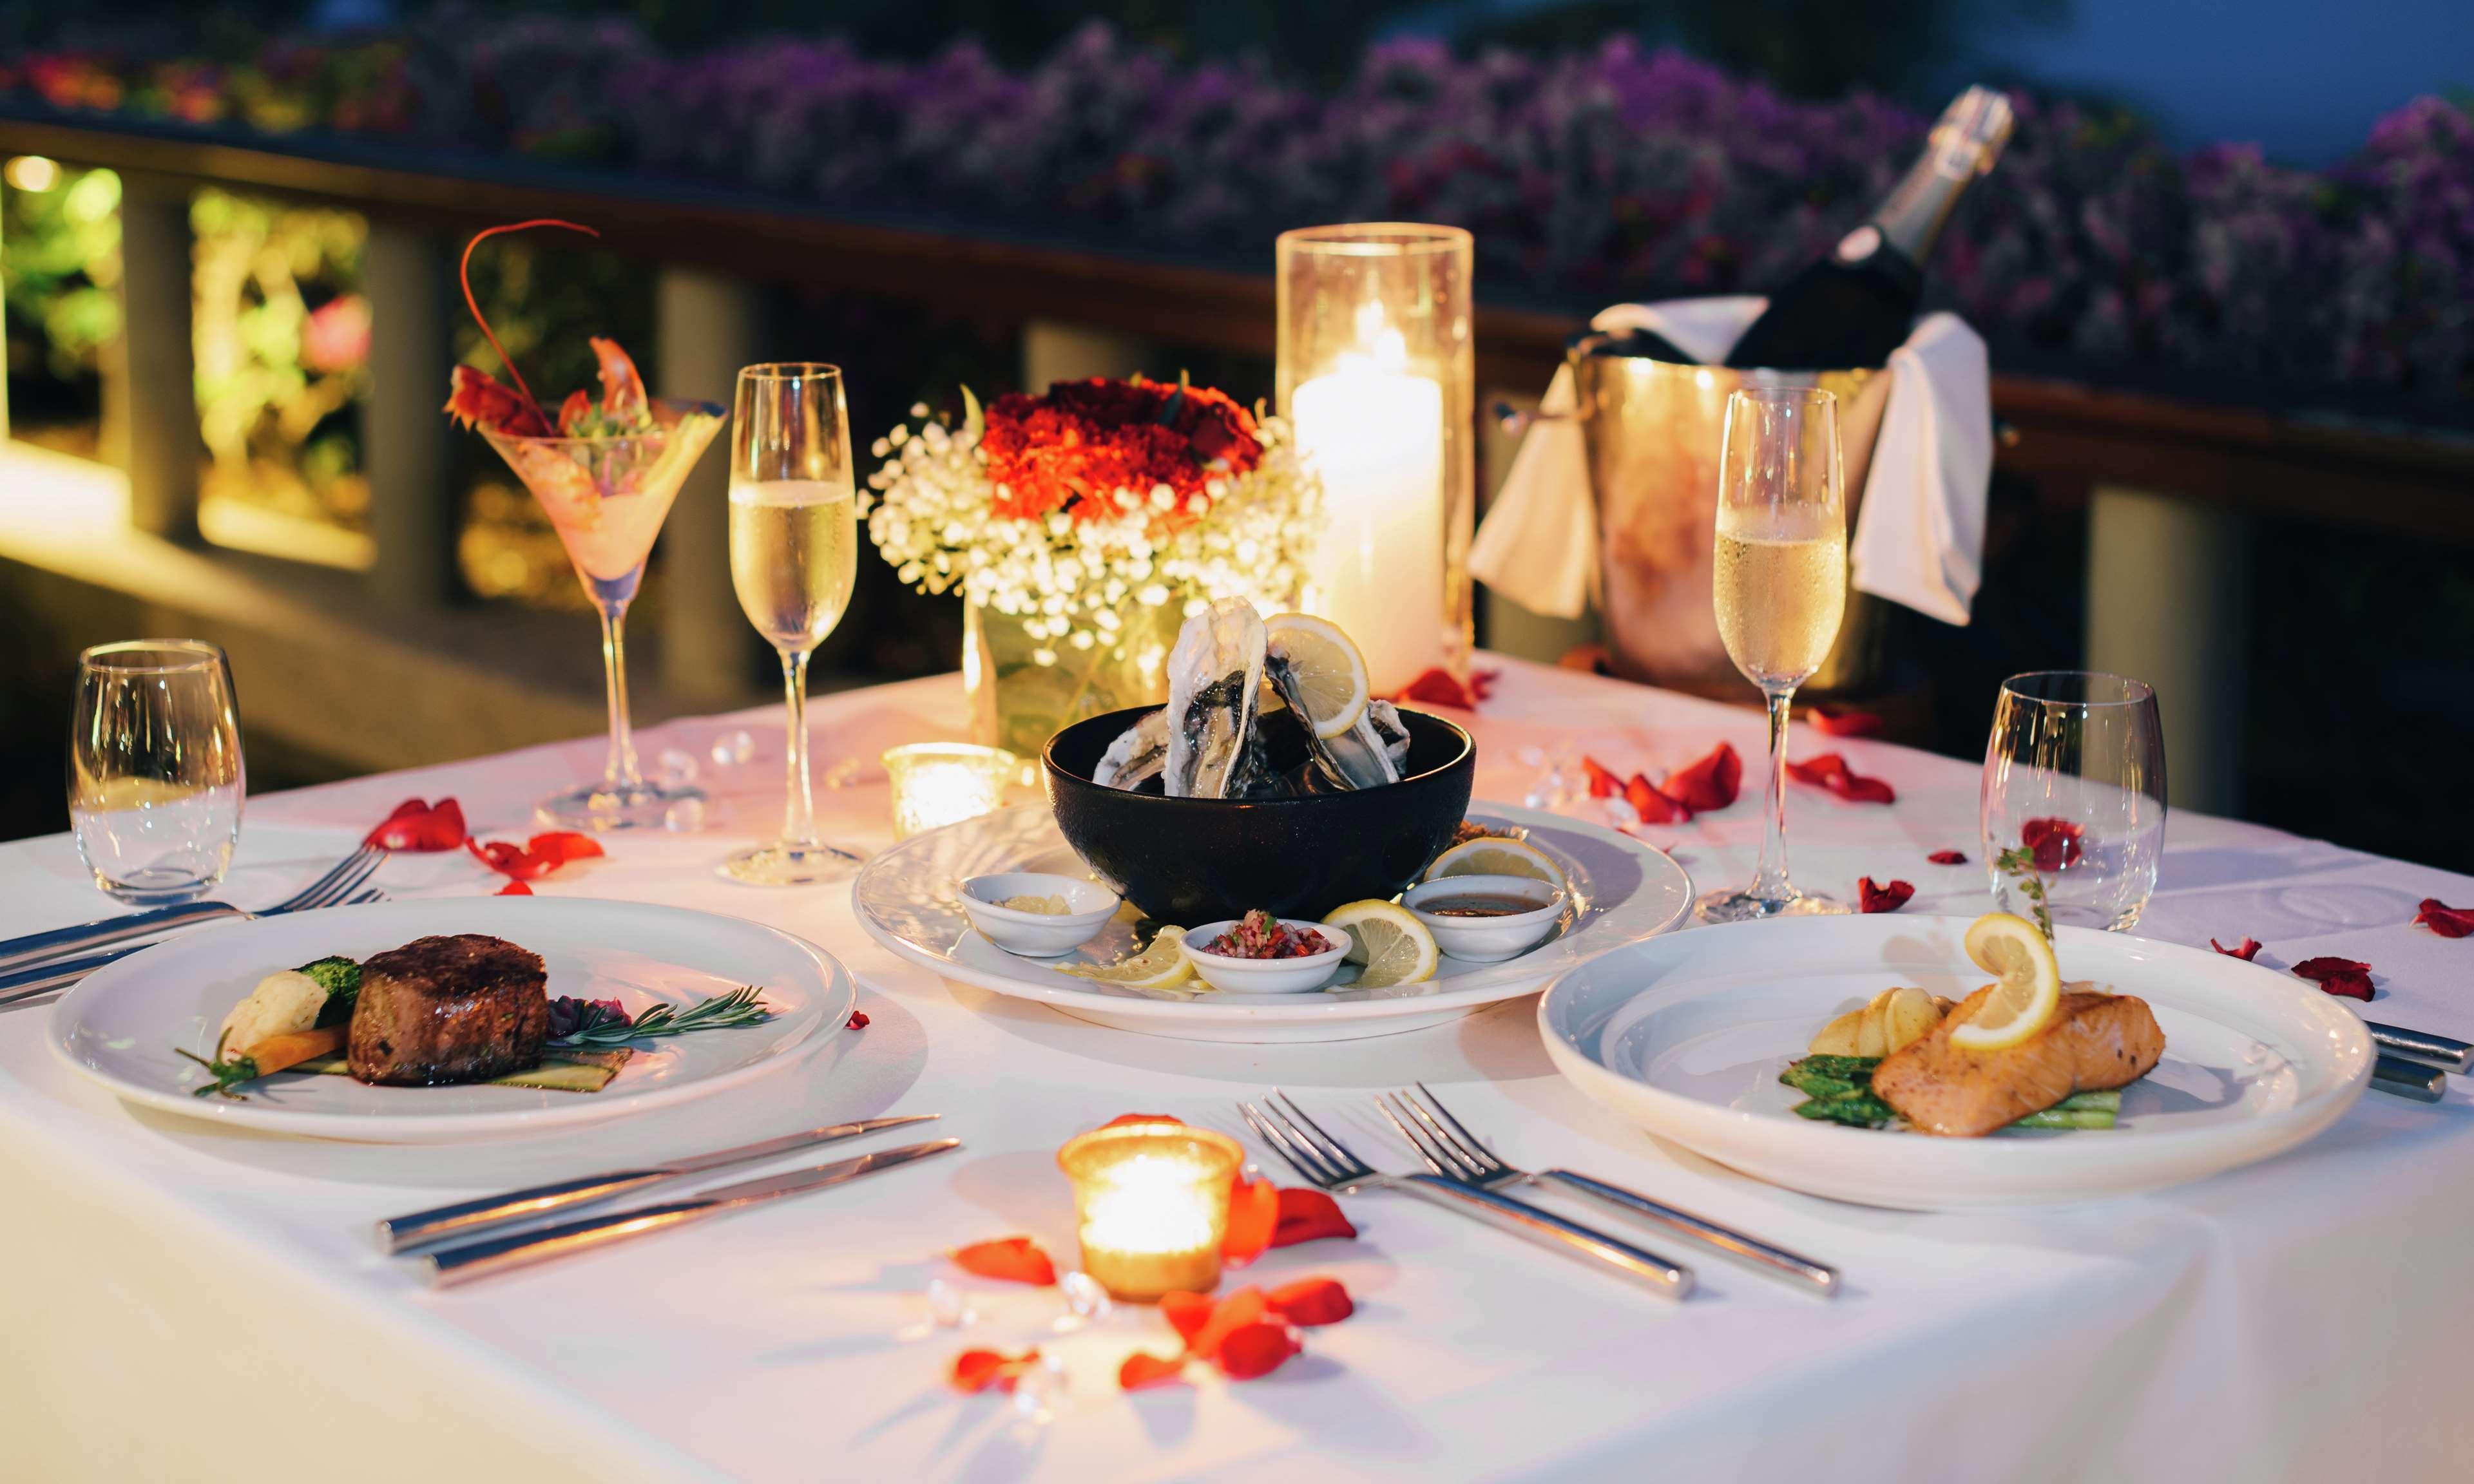 Ужин в ресторане на двоих. Романтический ужин. Романтический стол. Романтический ужин на двоих. Столик для романтического ужина.